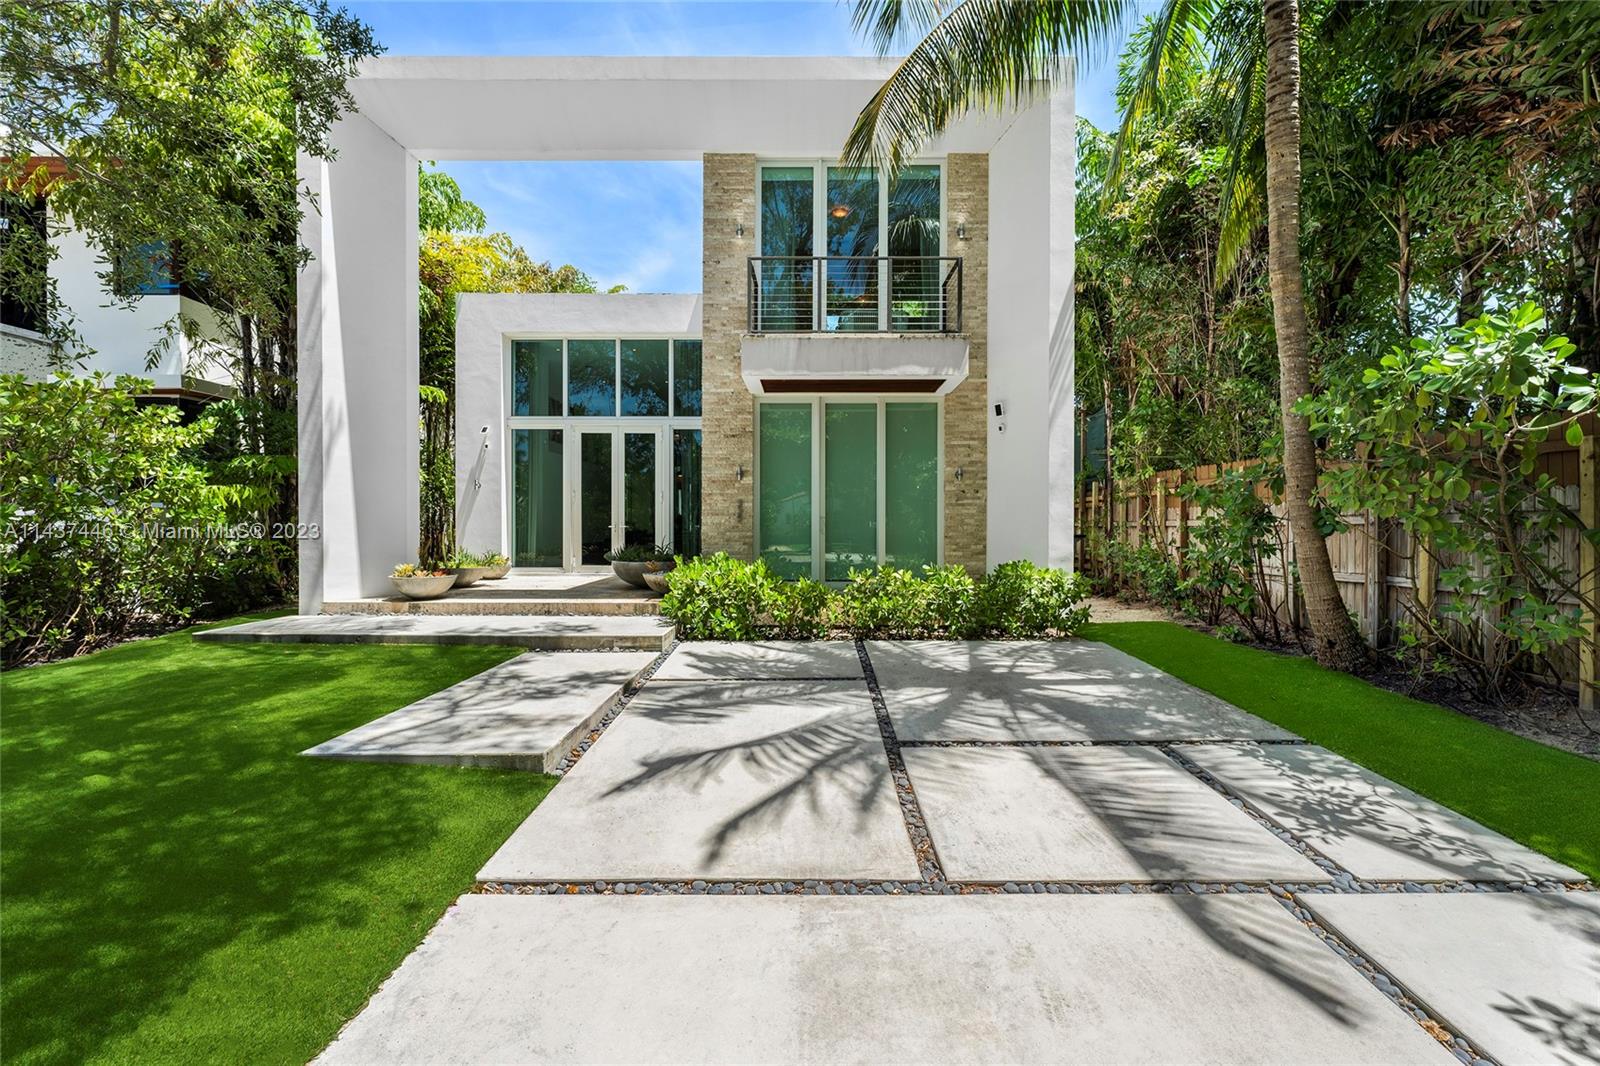 Rental Property at 335 W 46th St, Miami Beach, Miami-Dade County, Florida - Bedrooms: 4 
Bathrooms: 5  - $39,000 MO.